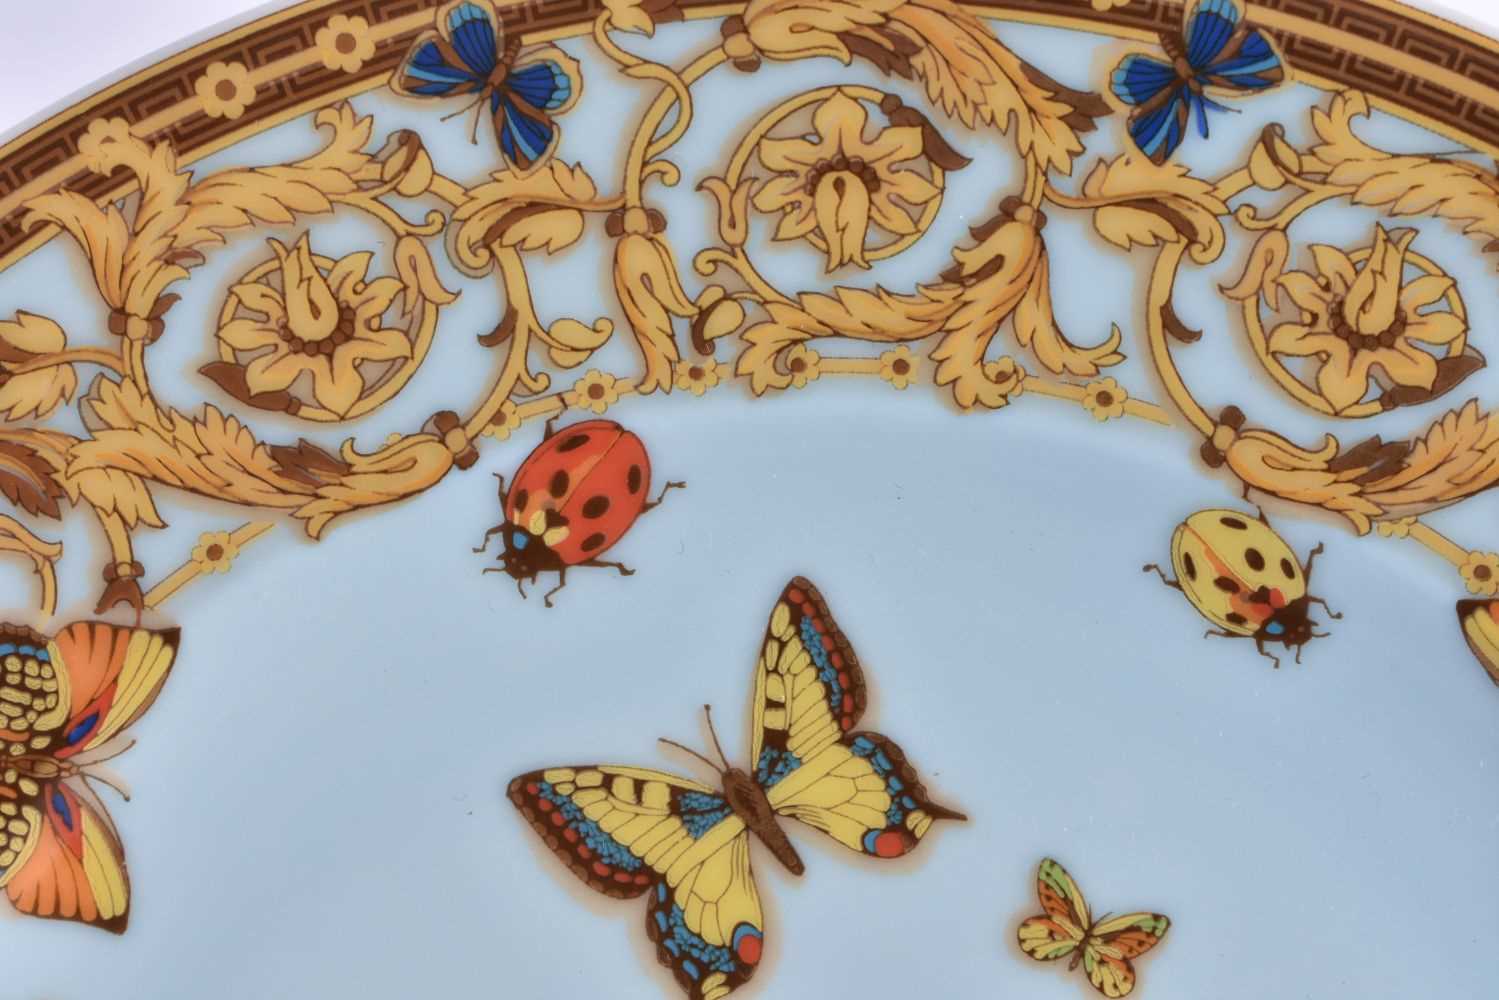 Versace Le Jardin Plate in Original Box w/ Certificate. 8.5 cm diameter. - Image 4 of 5